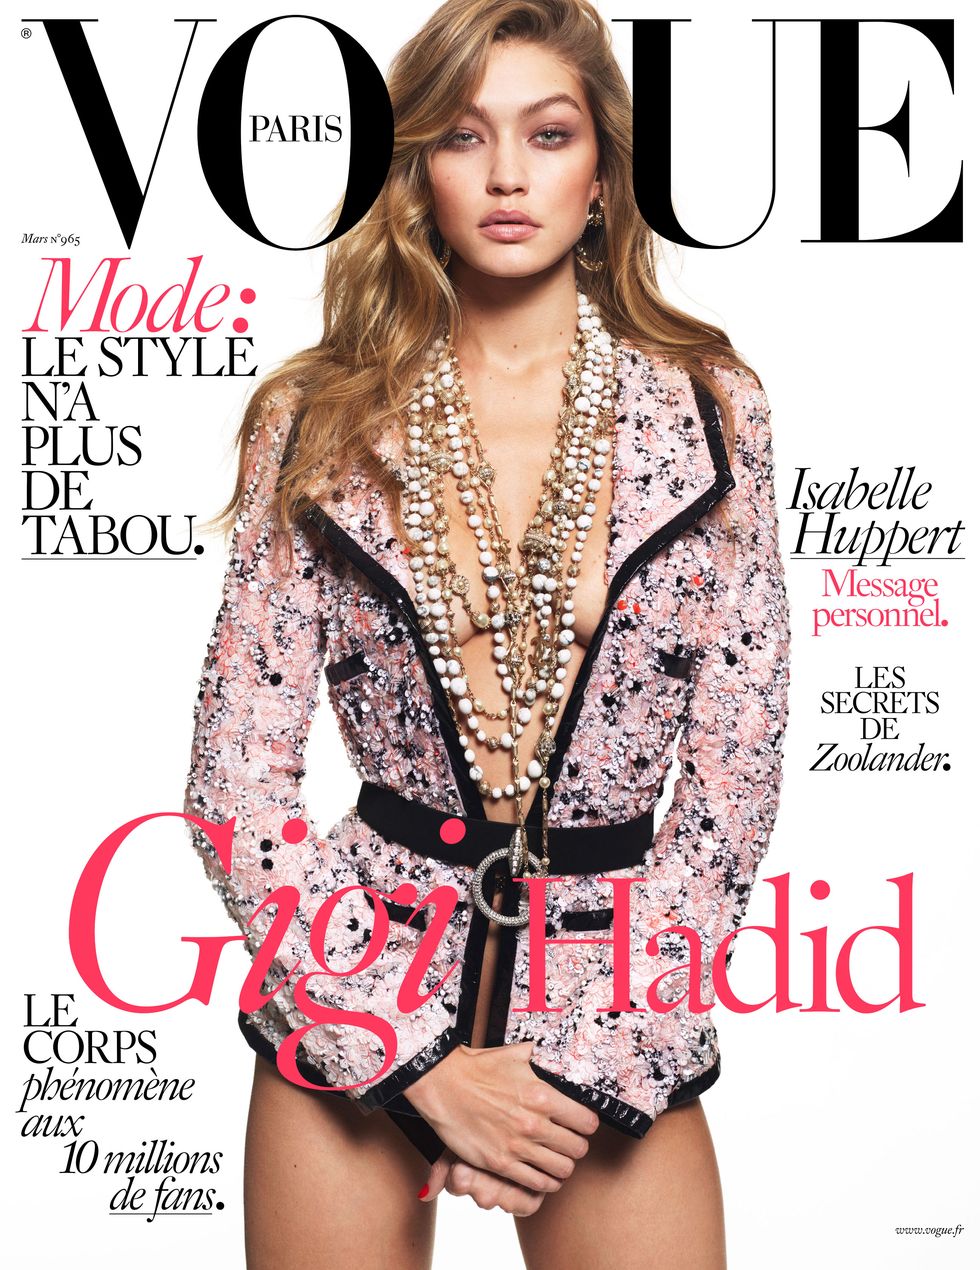 Gigi Hadid on the cover of Vogue Paris